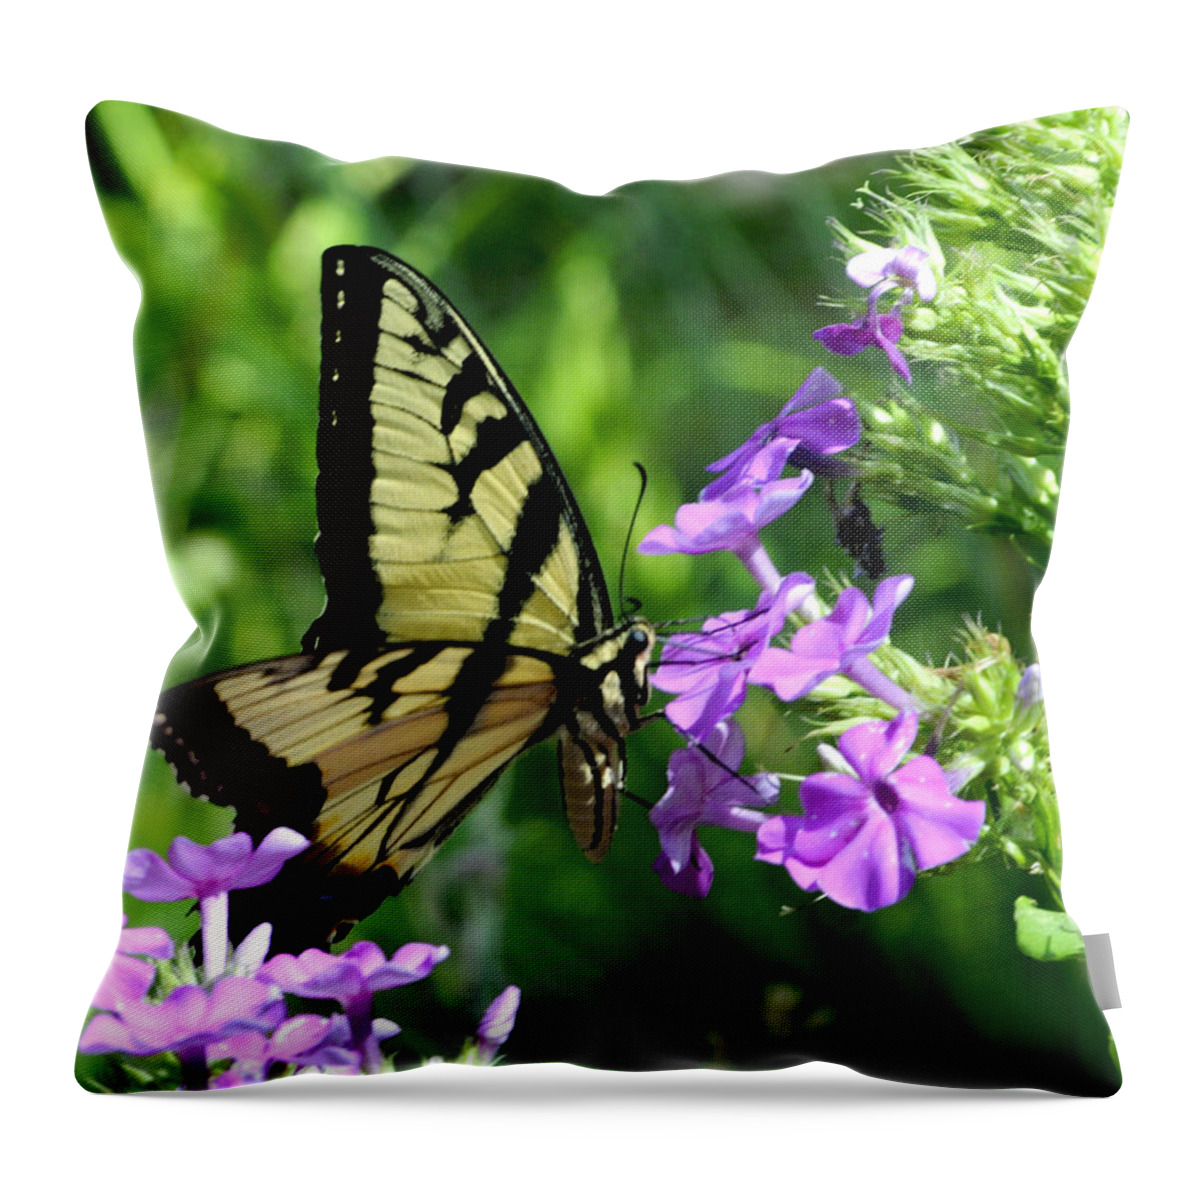 Green Throw Pillow featuring the photograph Butterfly and Flower by Glenn Grossman